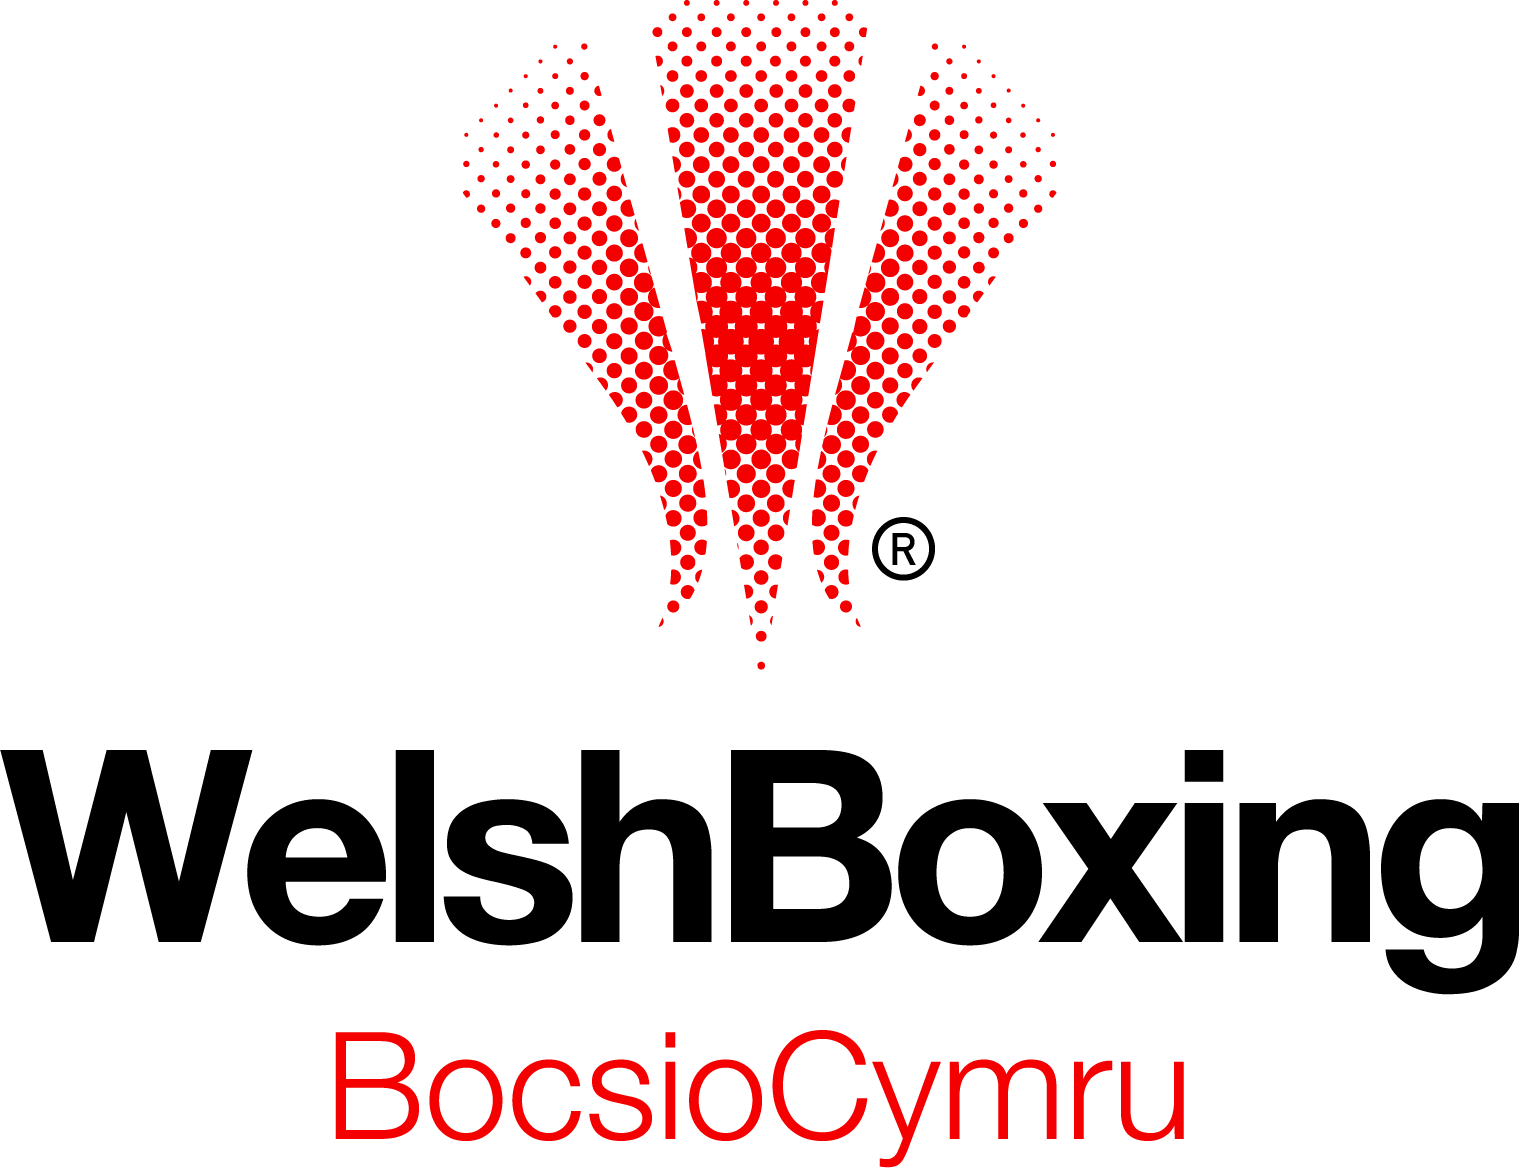 Welsh Boxing Website